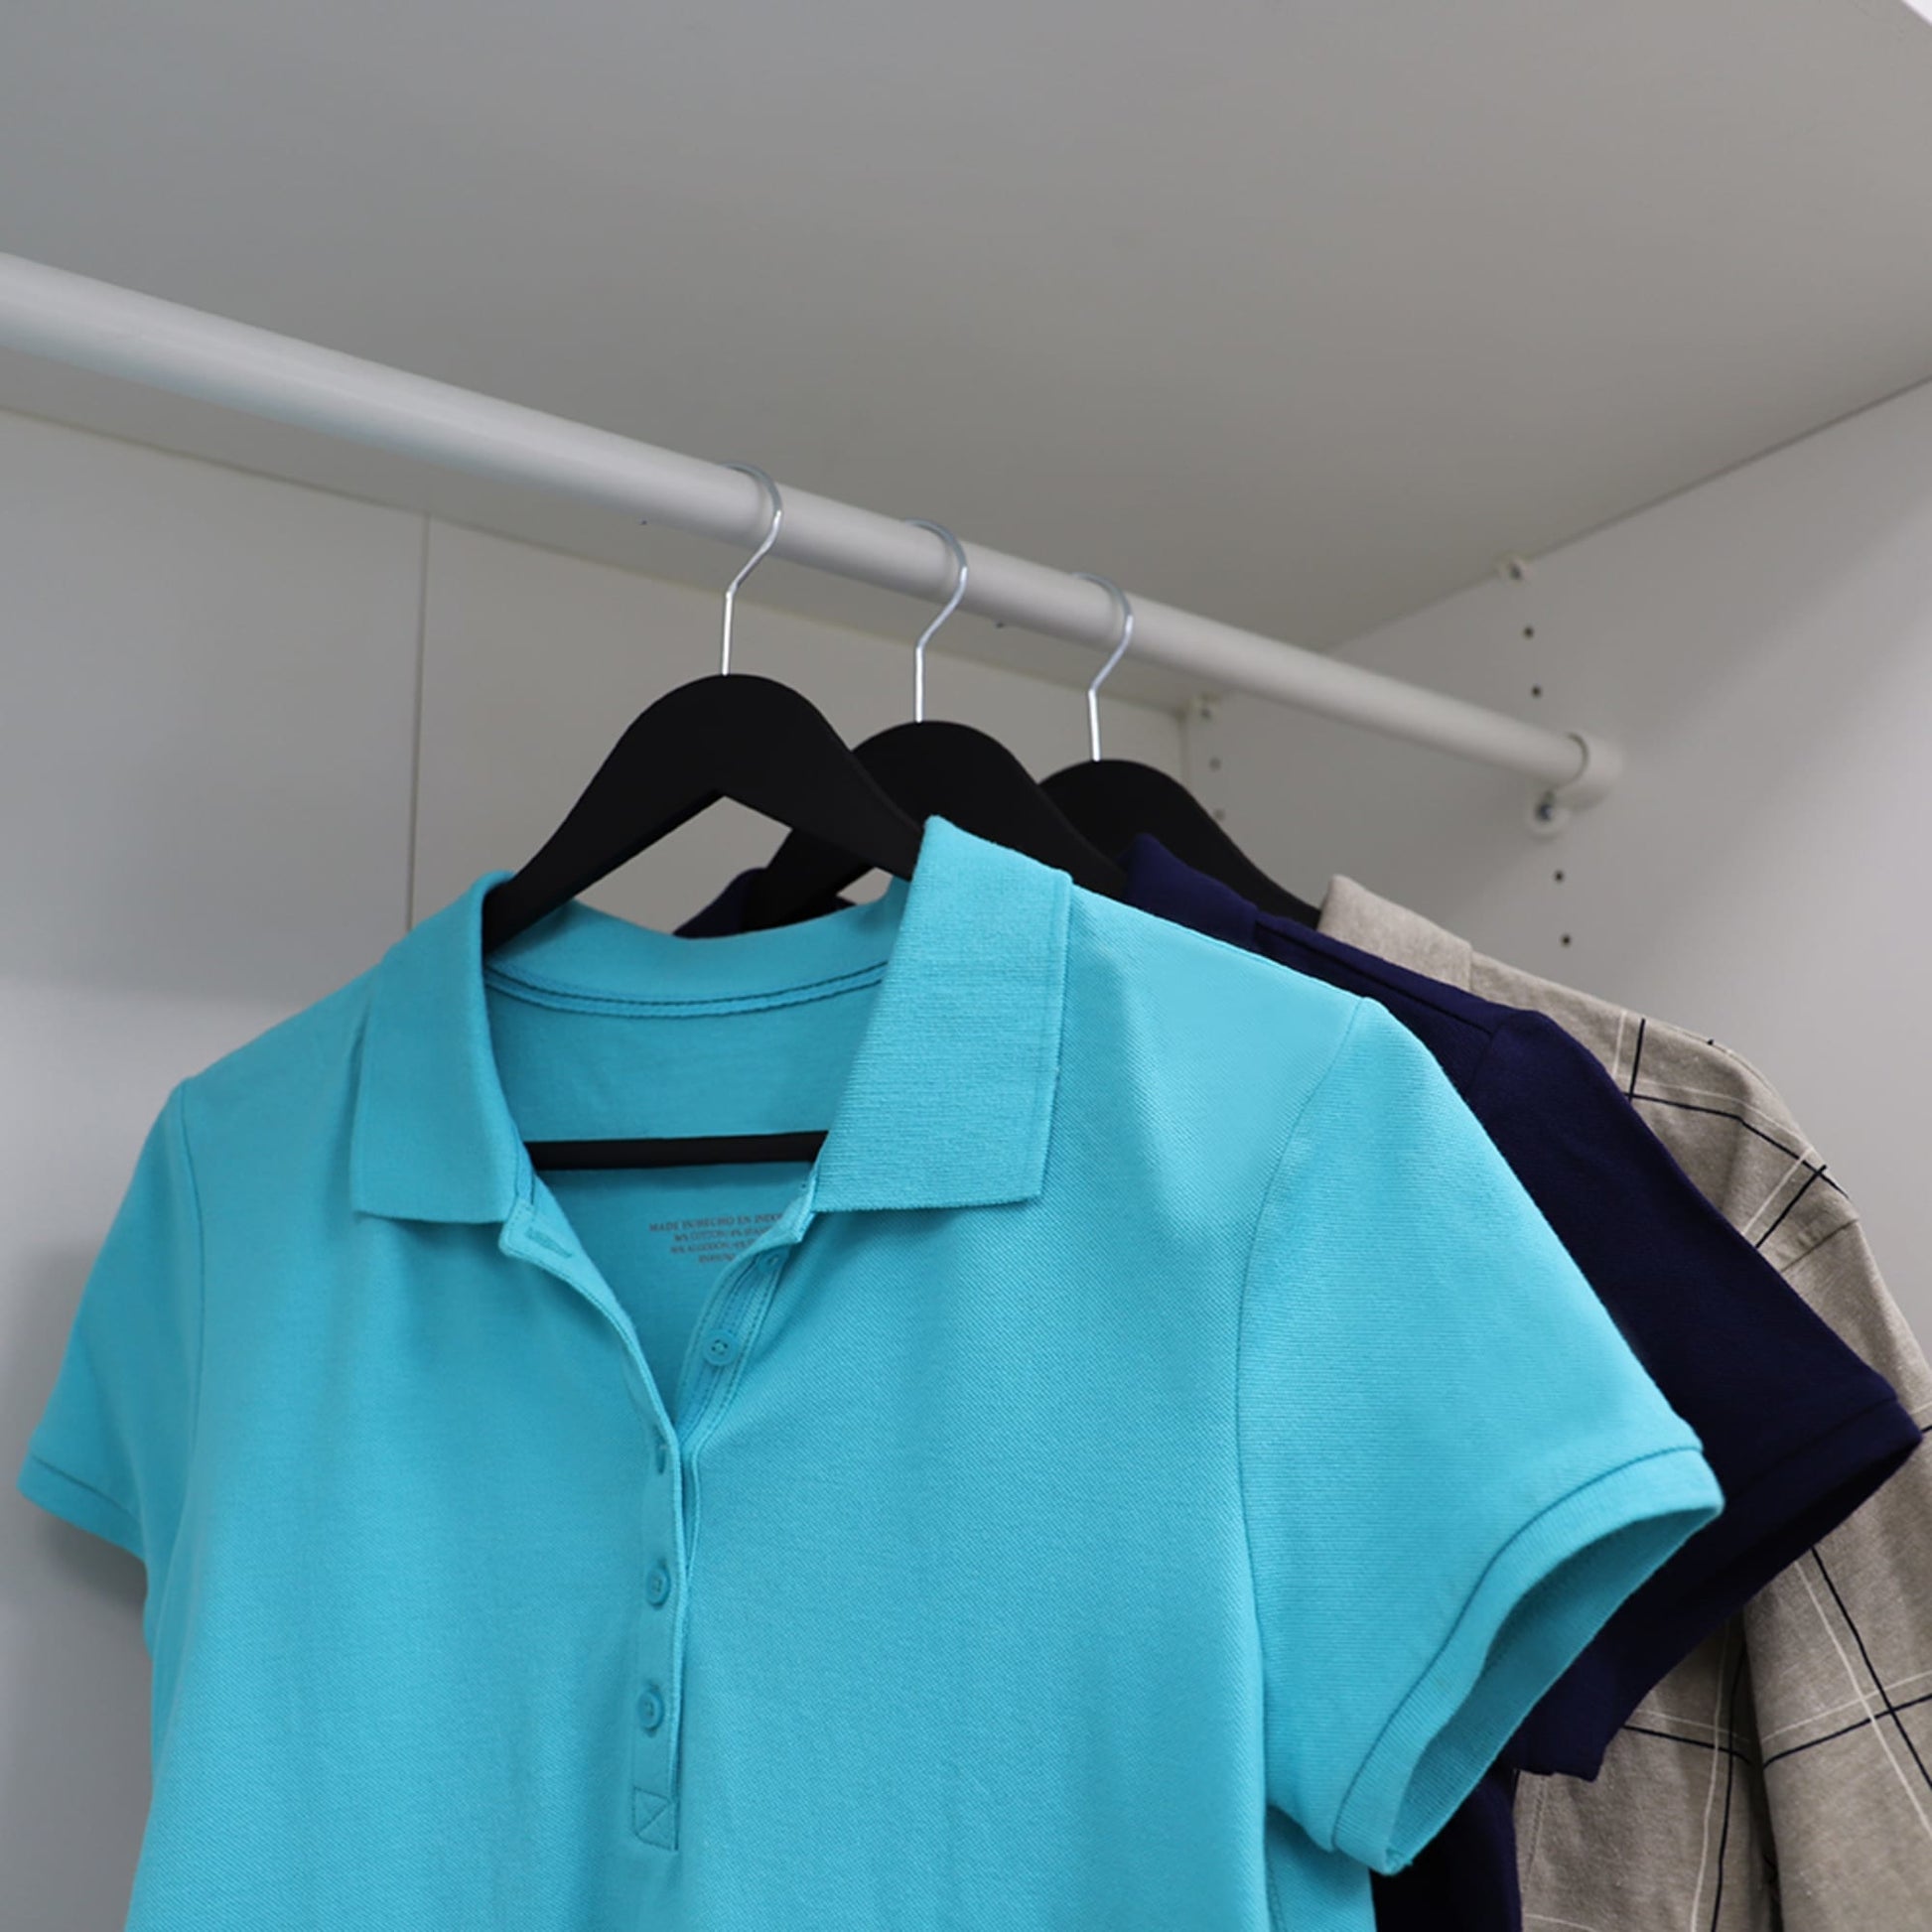 Home Basics 25-Pack Plastic Non-slip Grip Clothing Hanger (Black) in the  Hangers department at